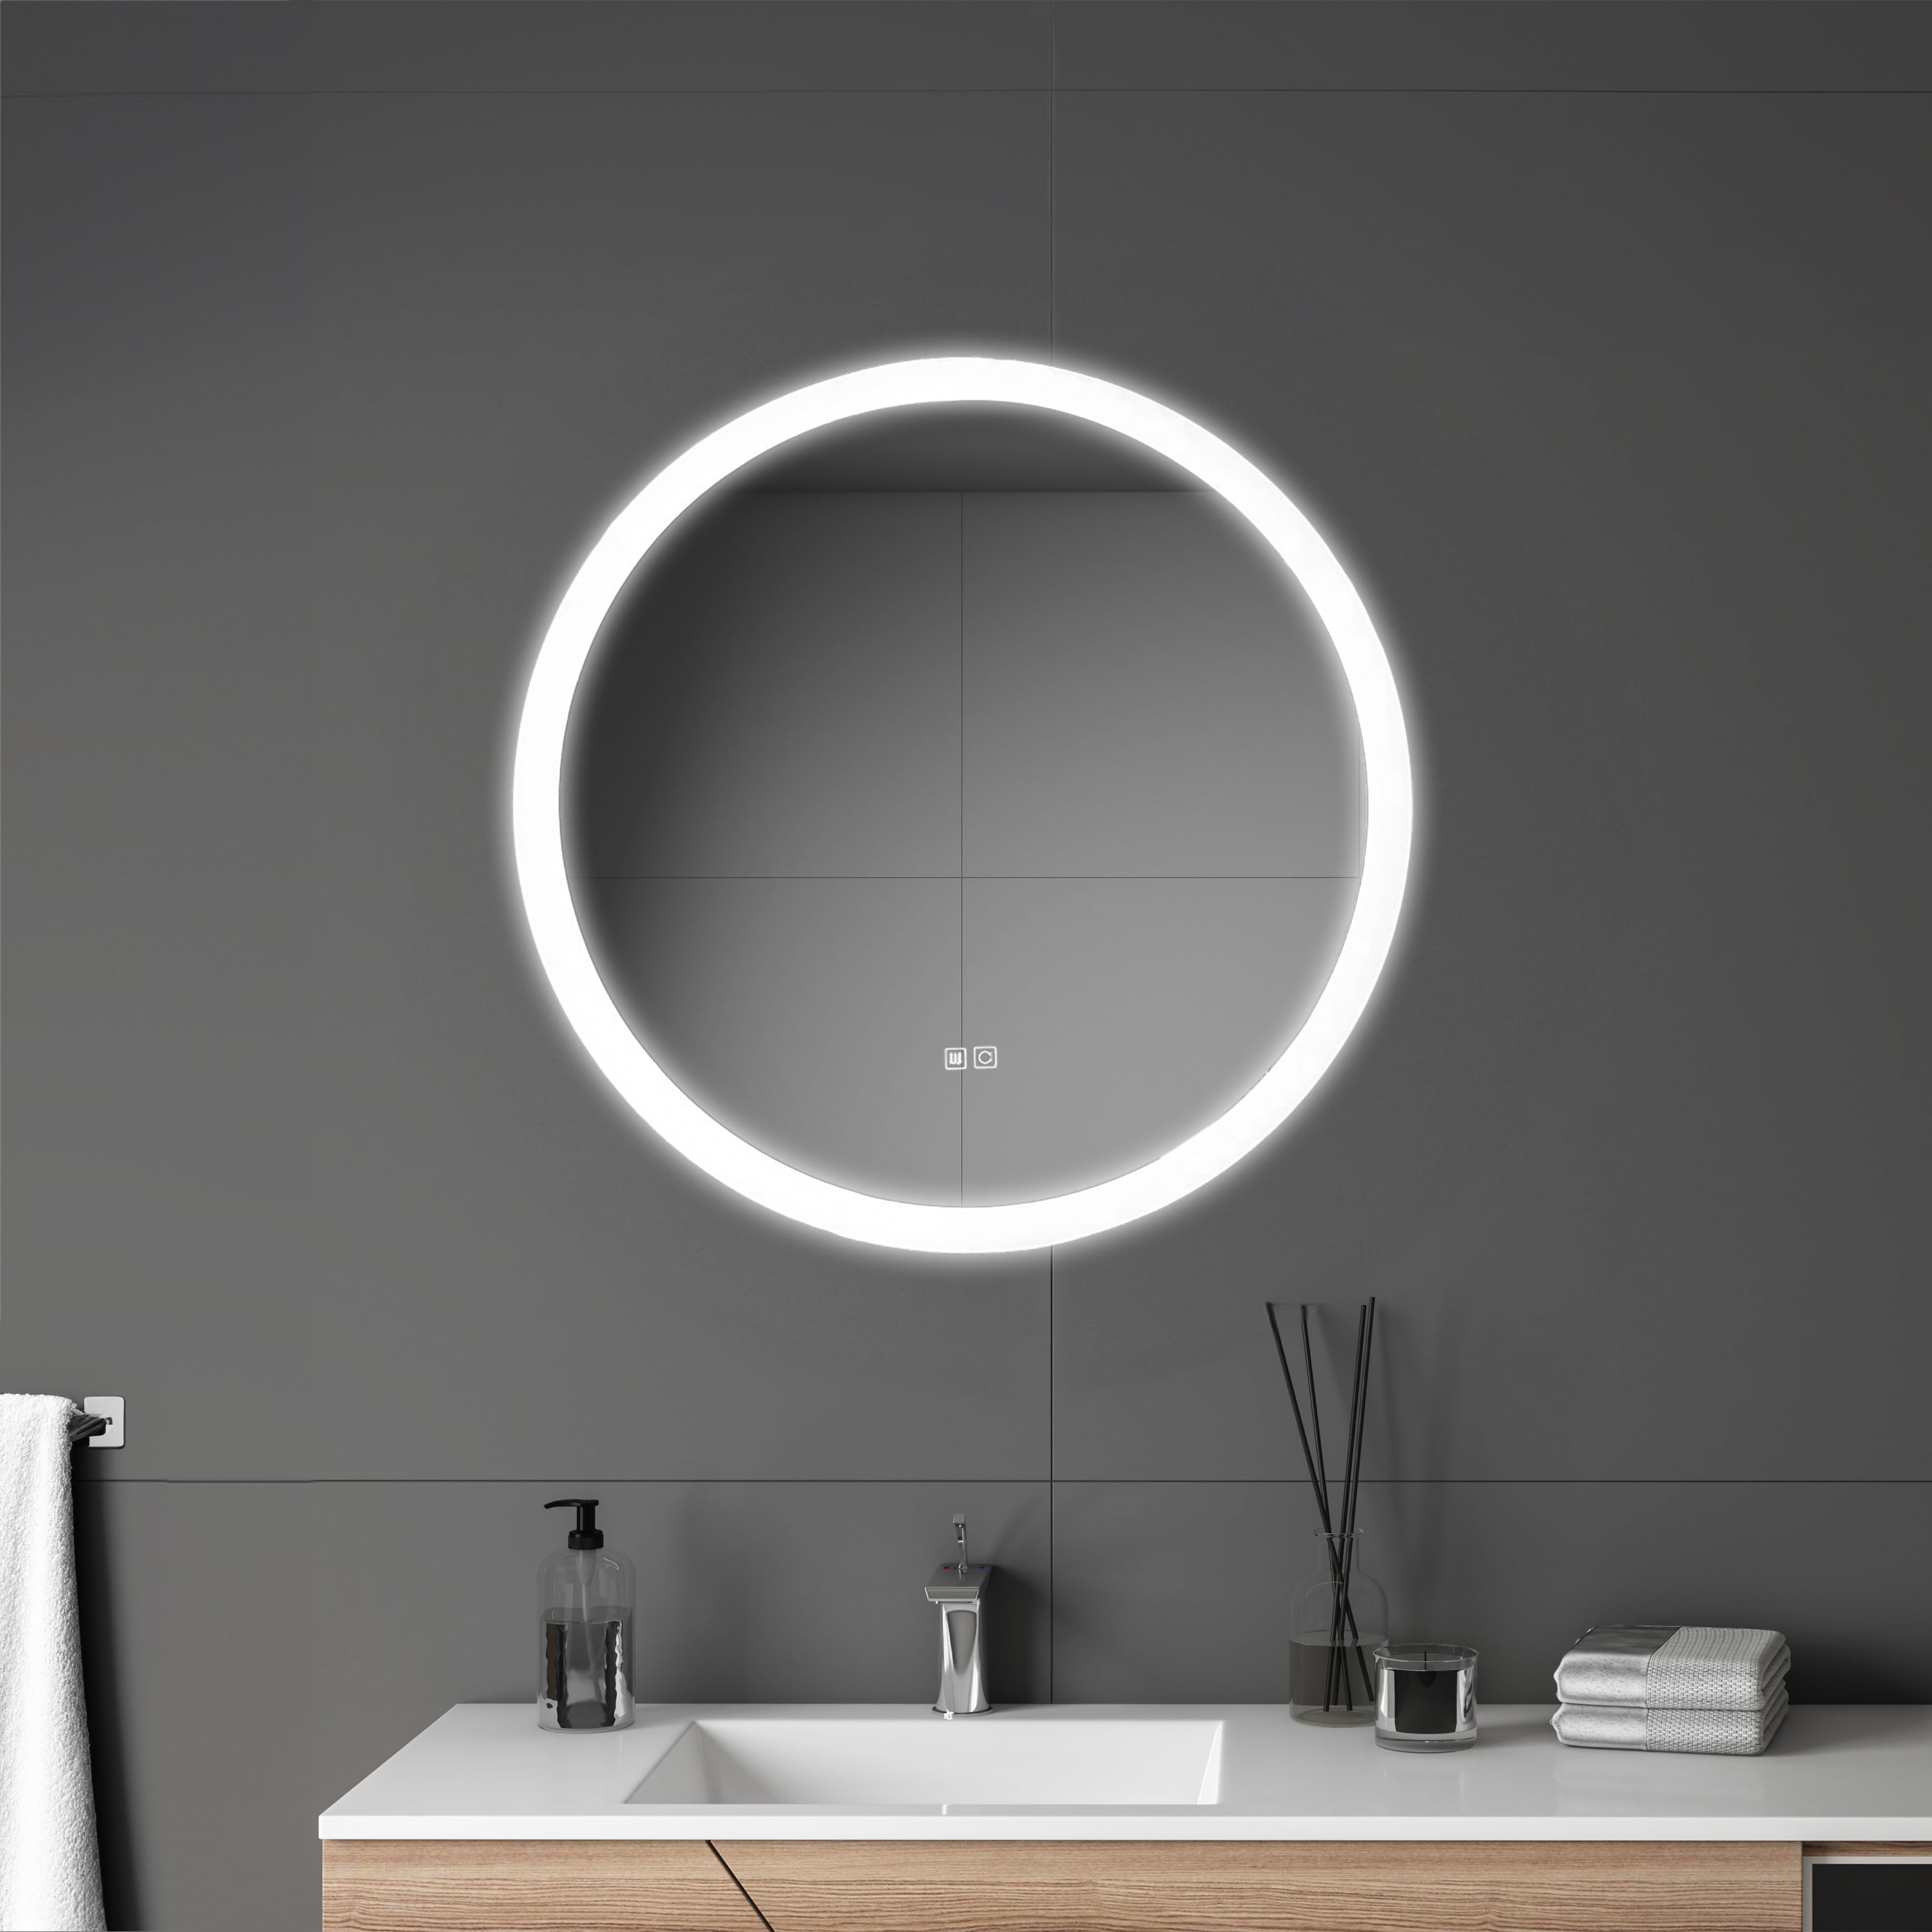 Dreamwerks-Mariana-24"-Round-LED-Mirror-integrated-Dimmer-Defogger-in-nice-luxury-bathroom-image-1